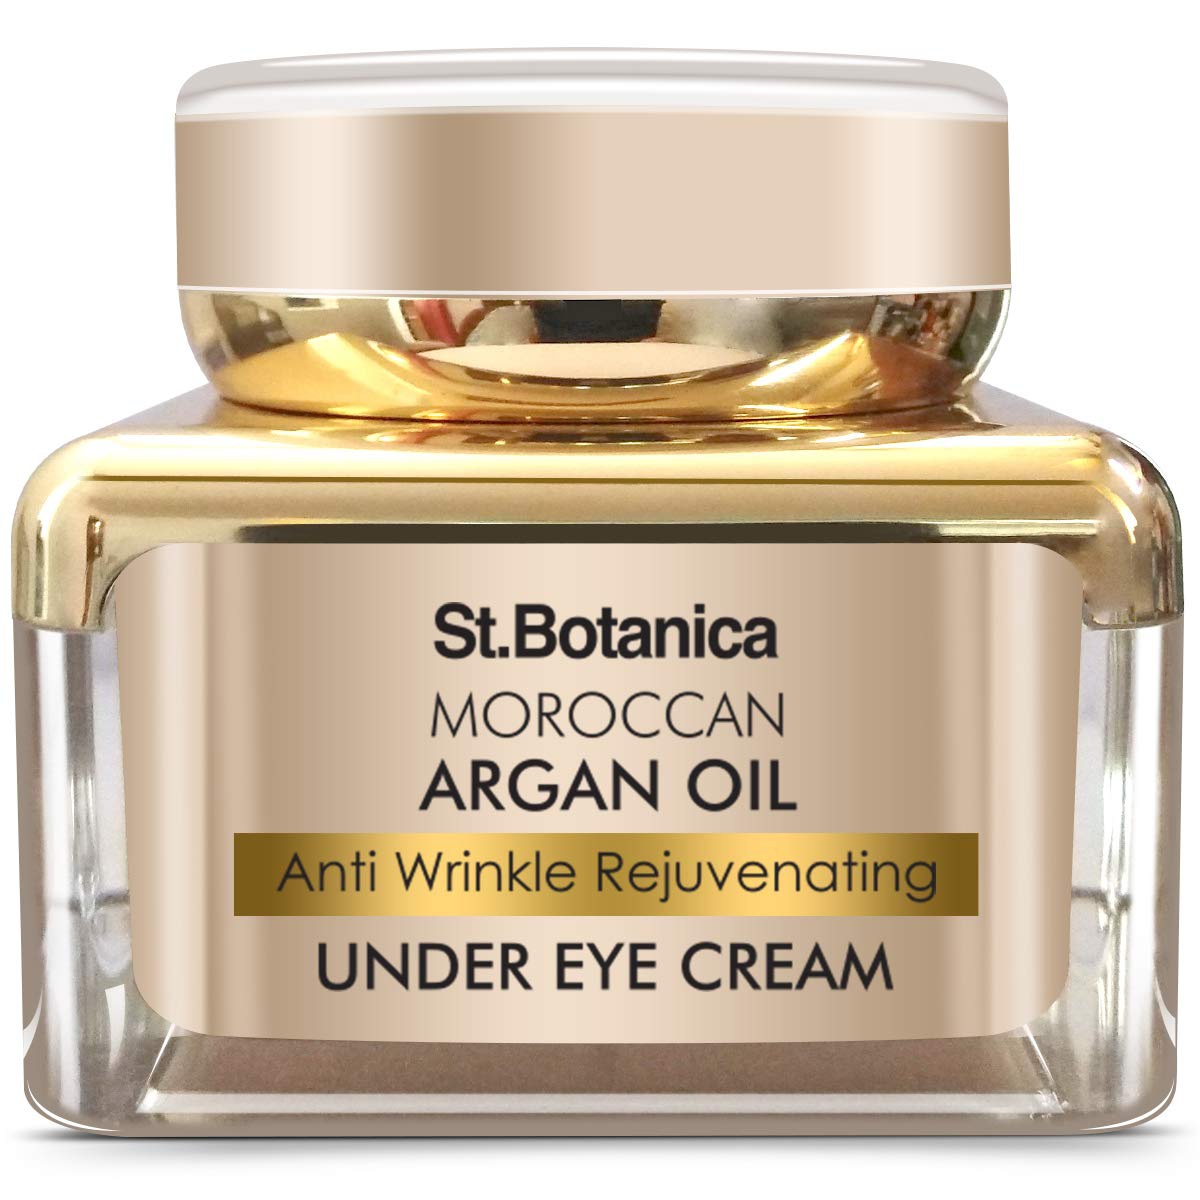 St. Botanica St.botanica Moroccan Argan Oil Anti Wrinkle Rejuvenating Under Eye Cream